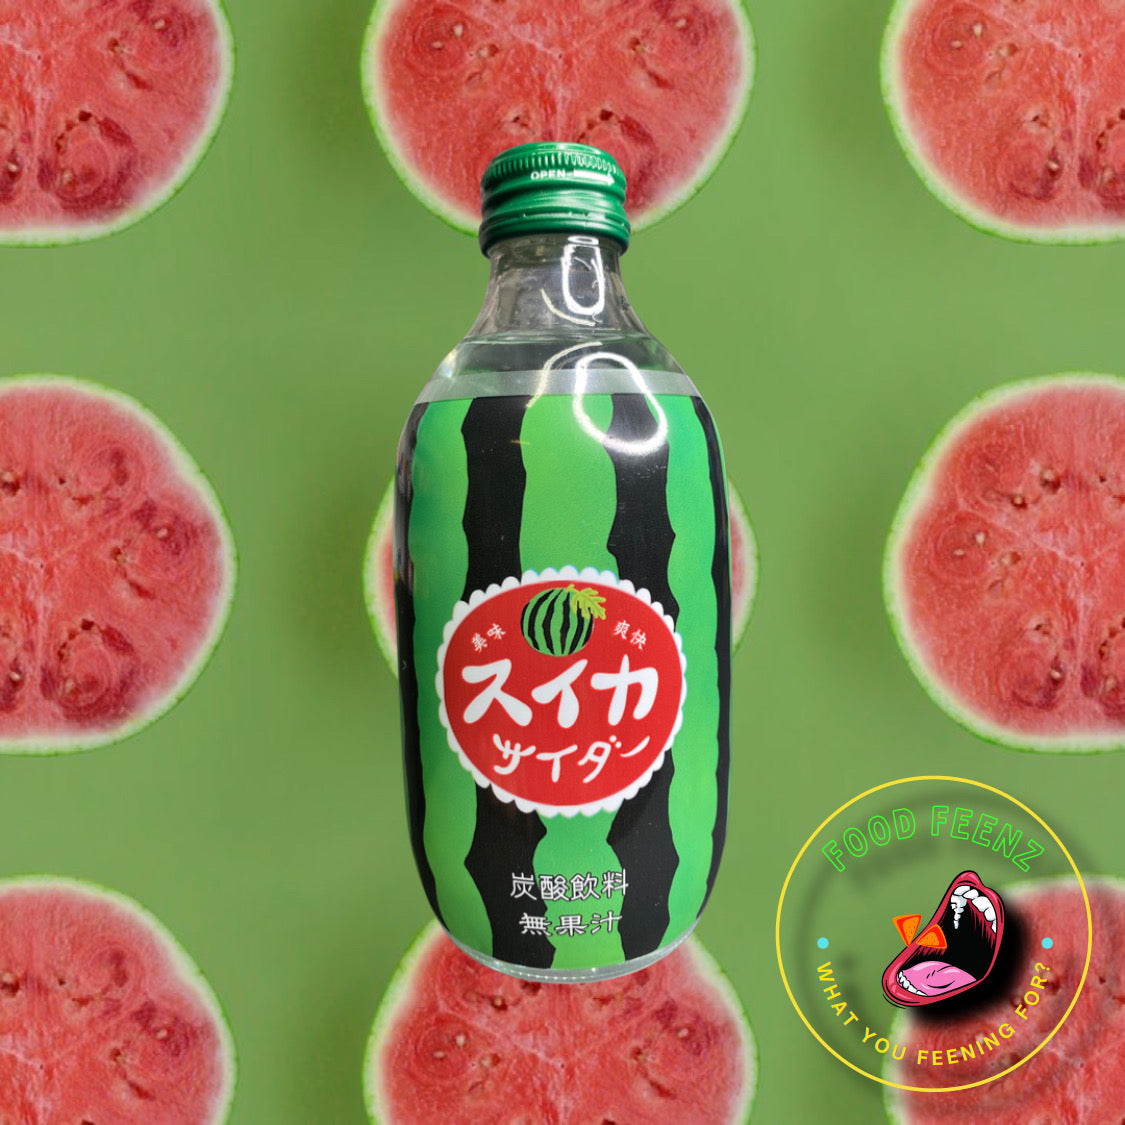 Tomomasu Watermelon Soda (Japan)